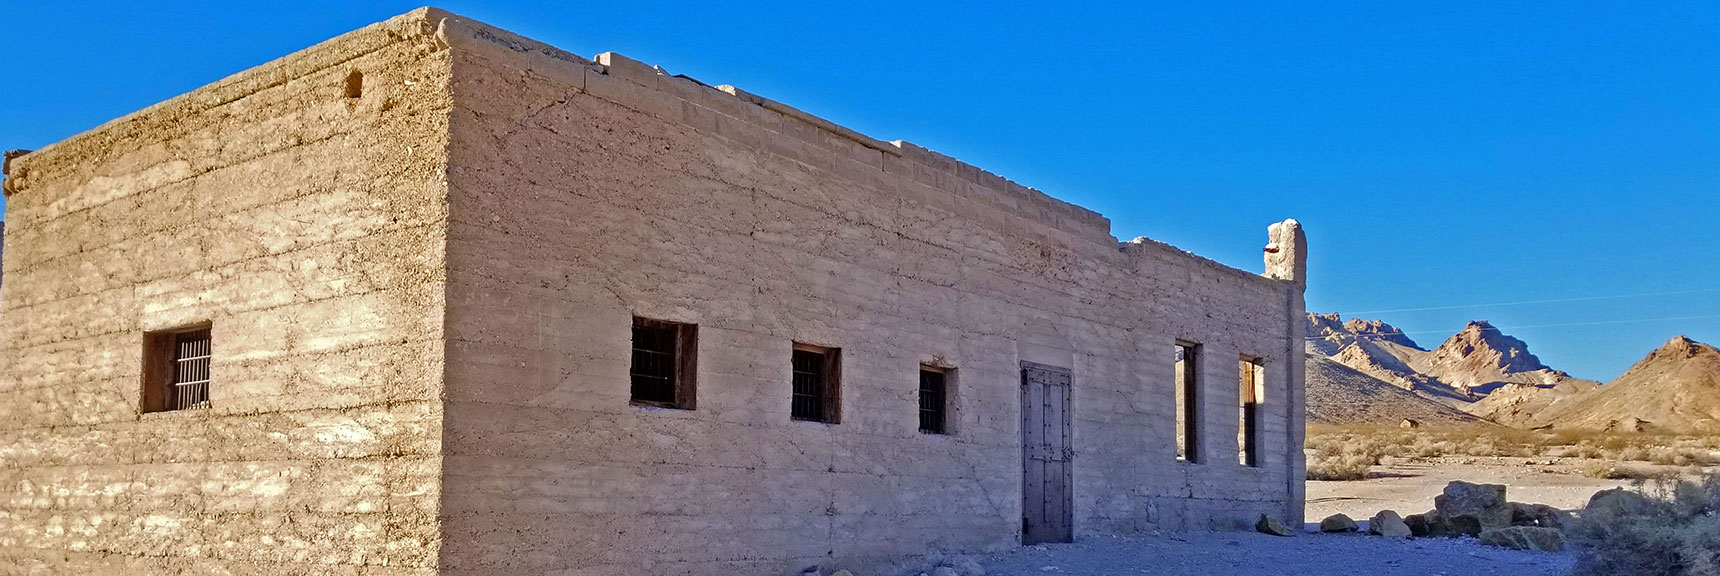 Rhyolite Jail | Rhyolite Ghost Town | Death Valley Area, Nevada